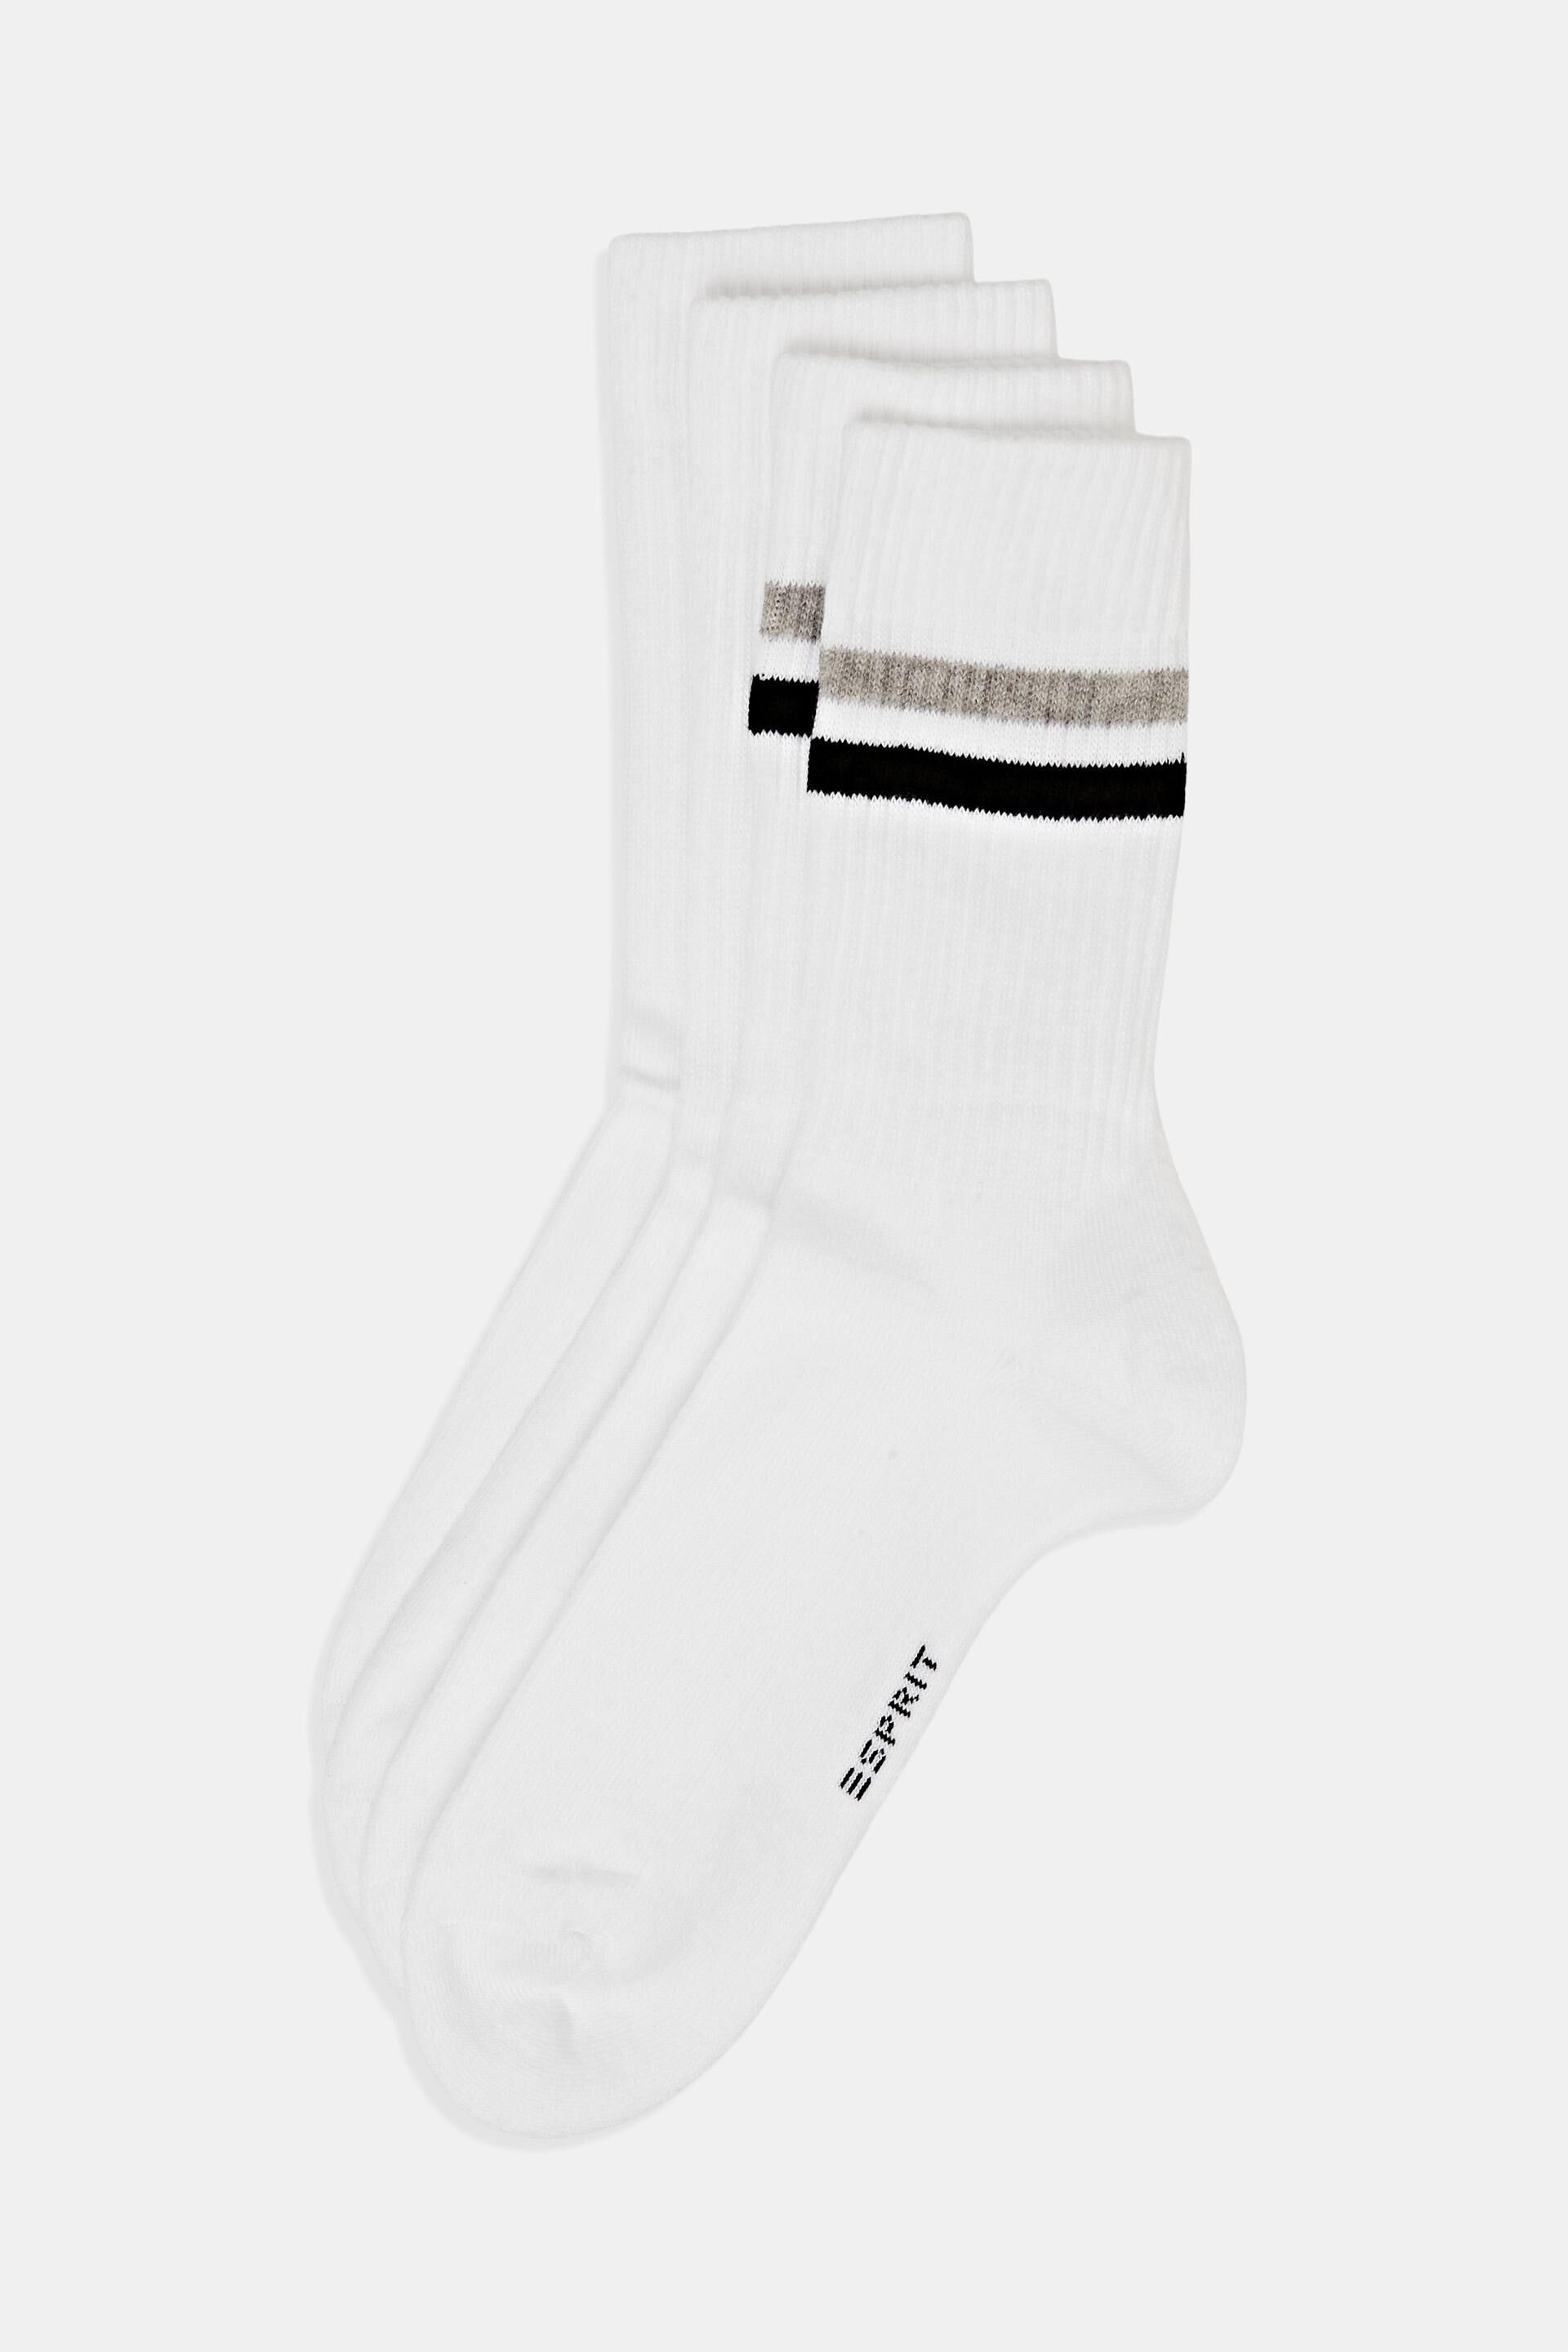 Online Shop Esprit 2-pack of athletic socks, organic cotton